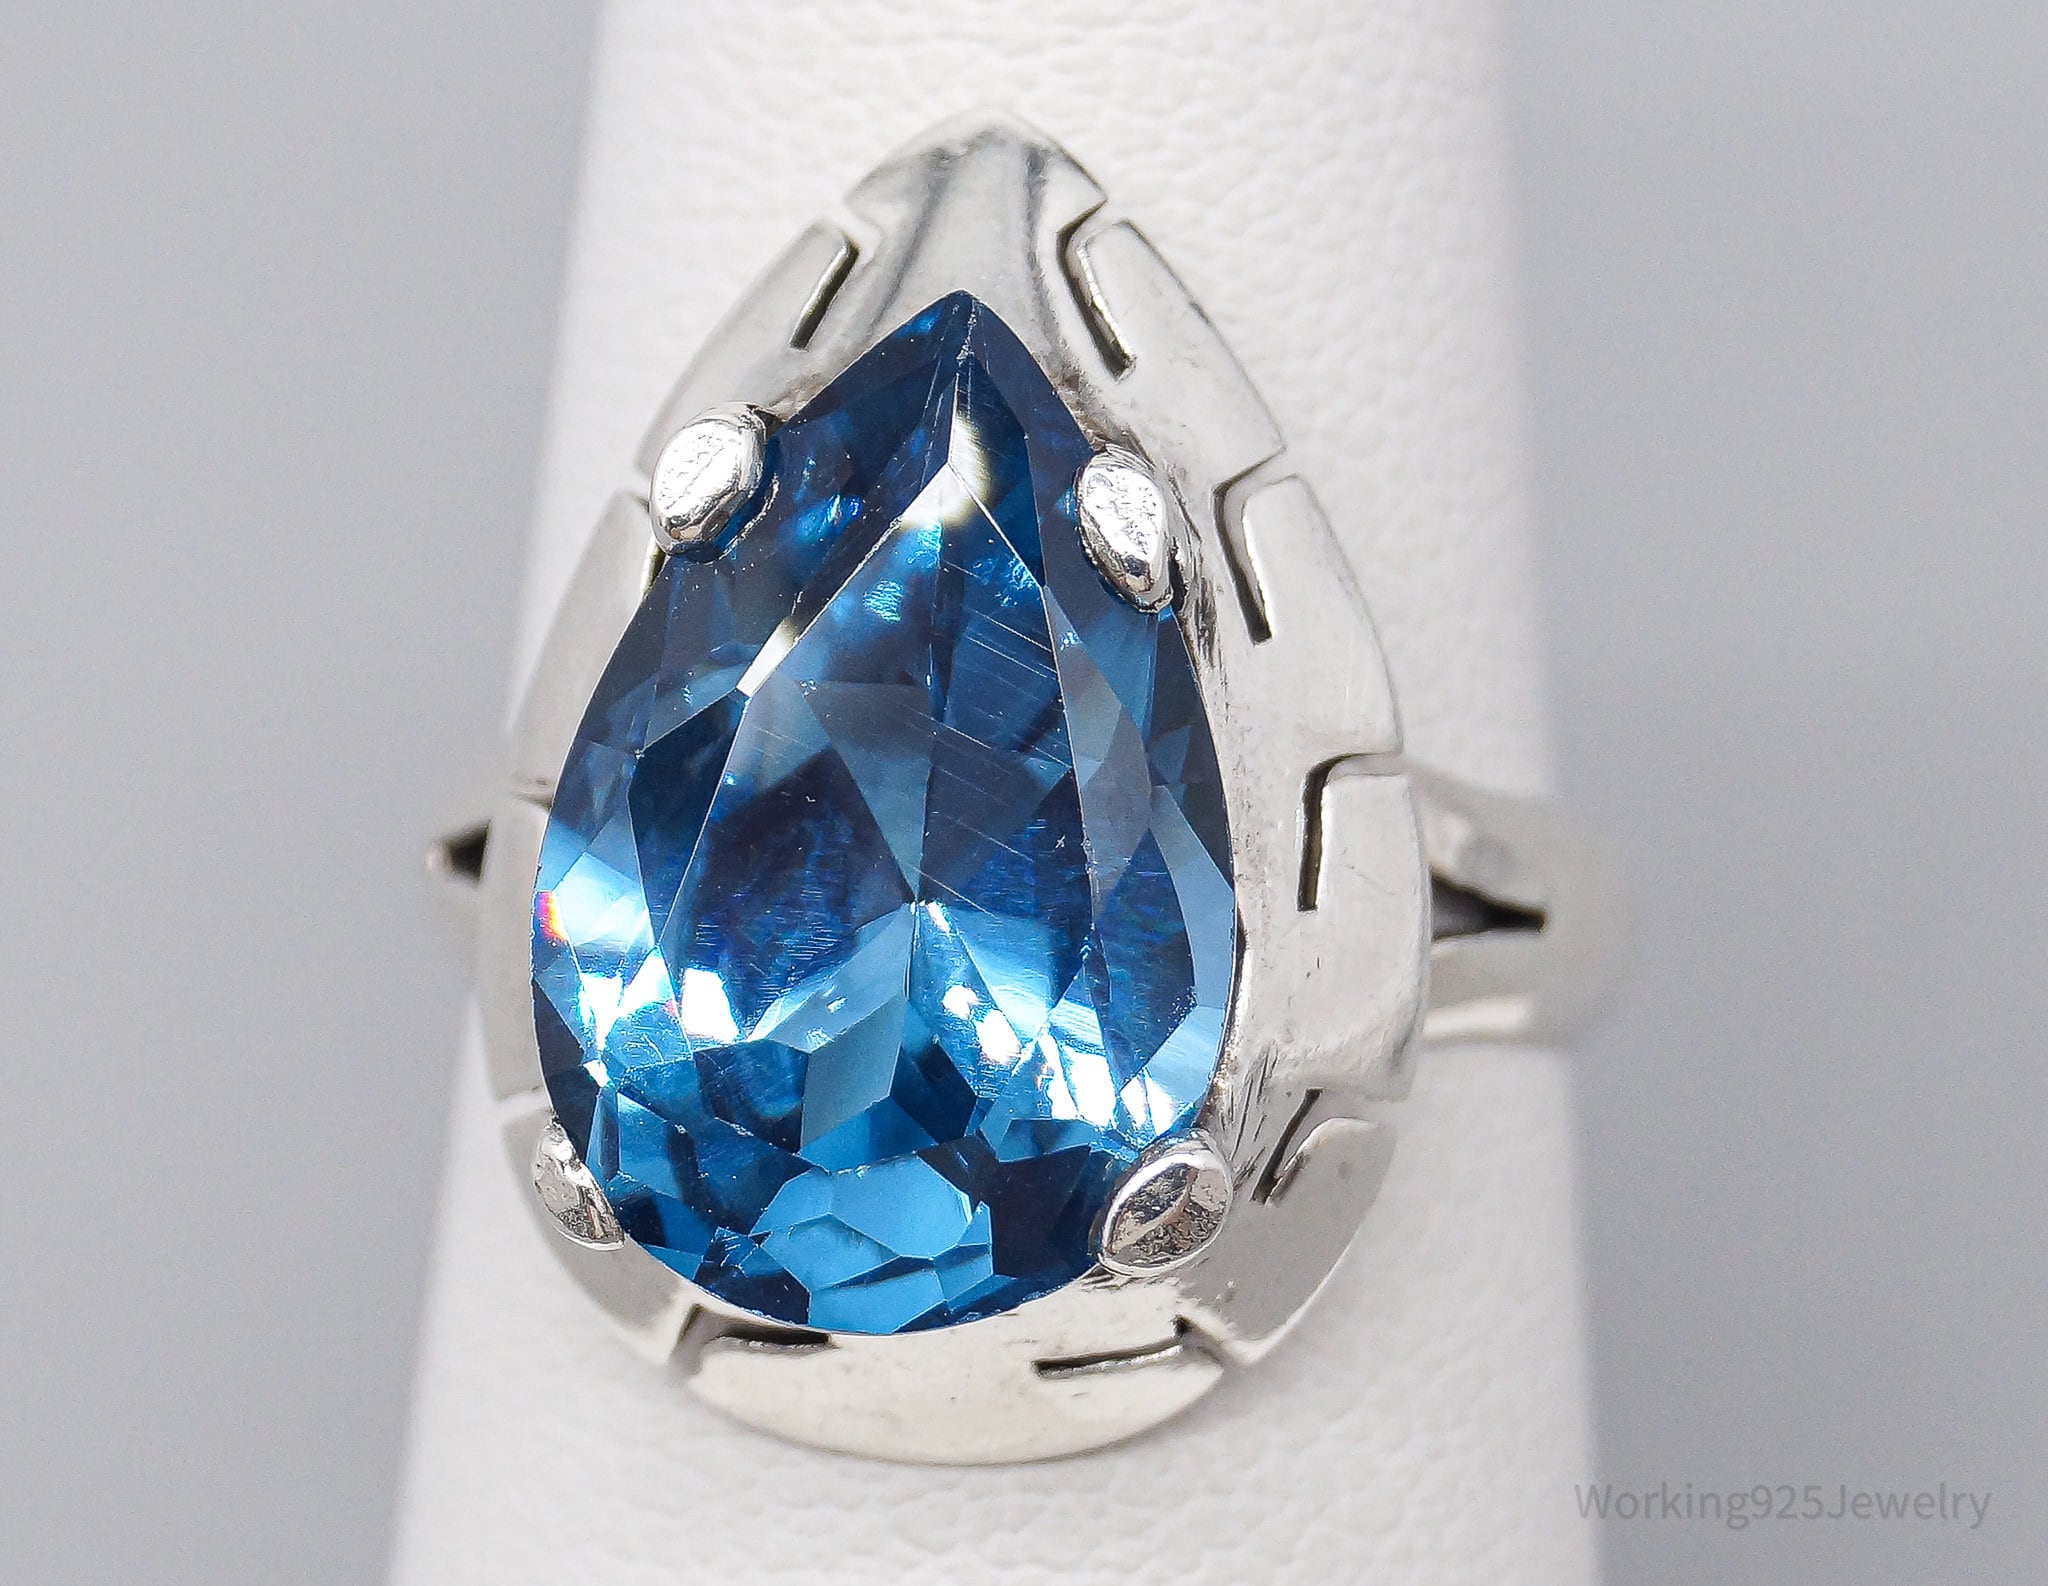 Vintage Large London Blue Topaz Sterling Silver Ring - Size 5.75